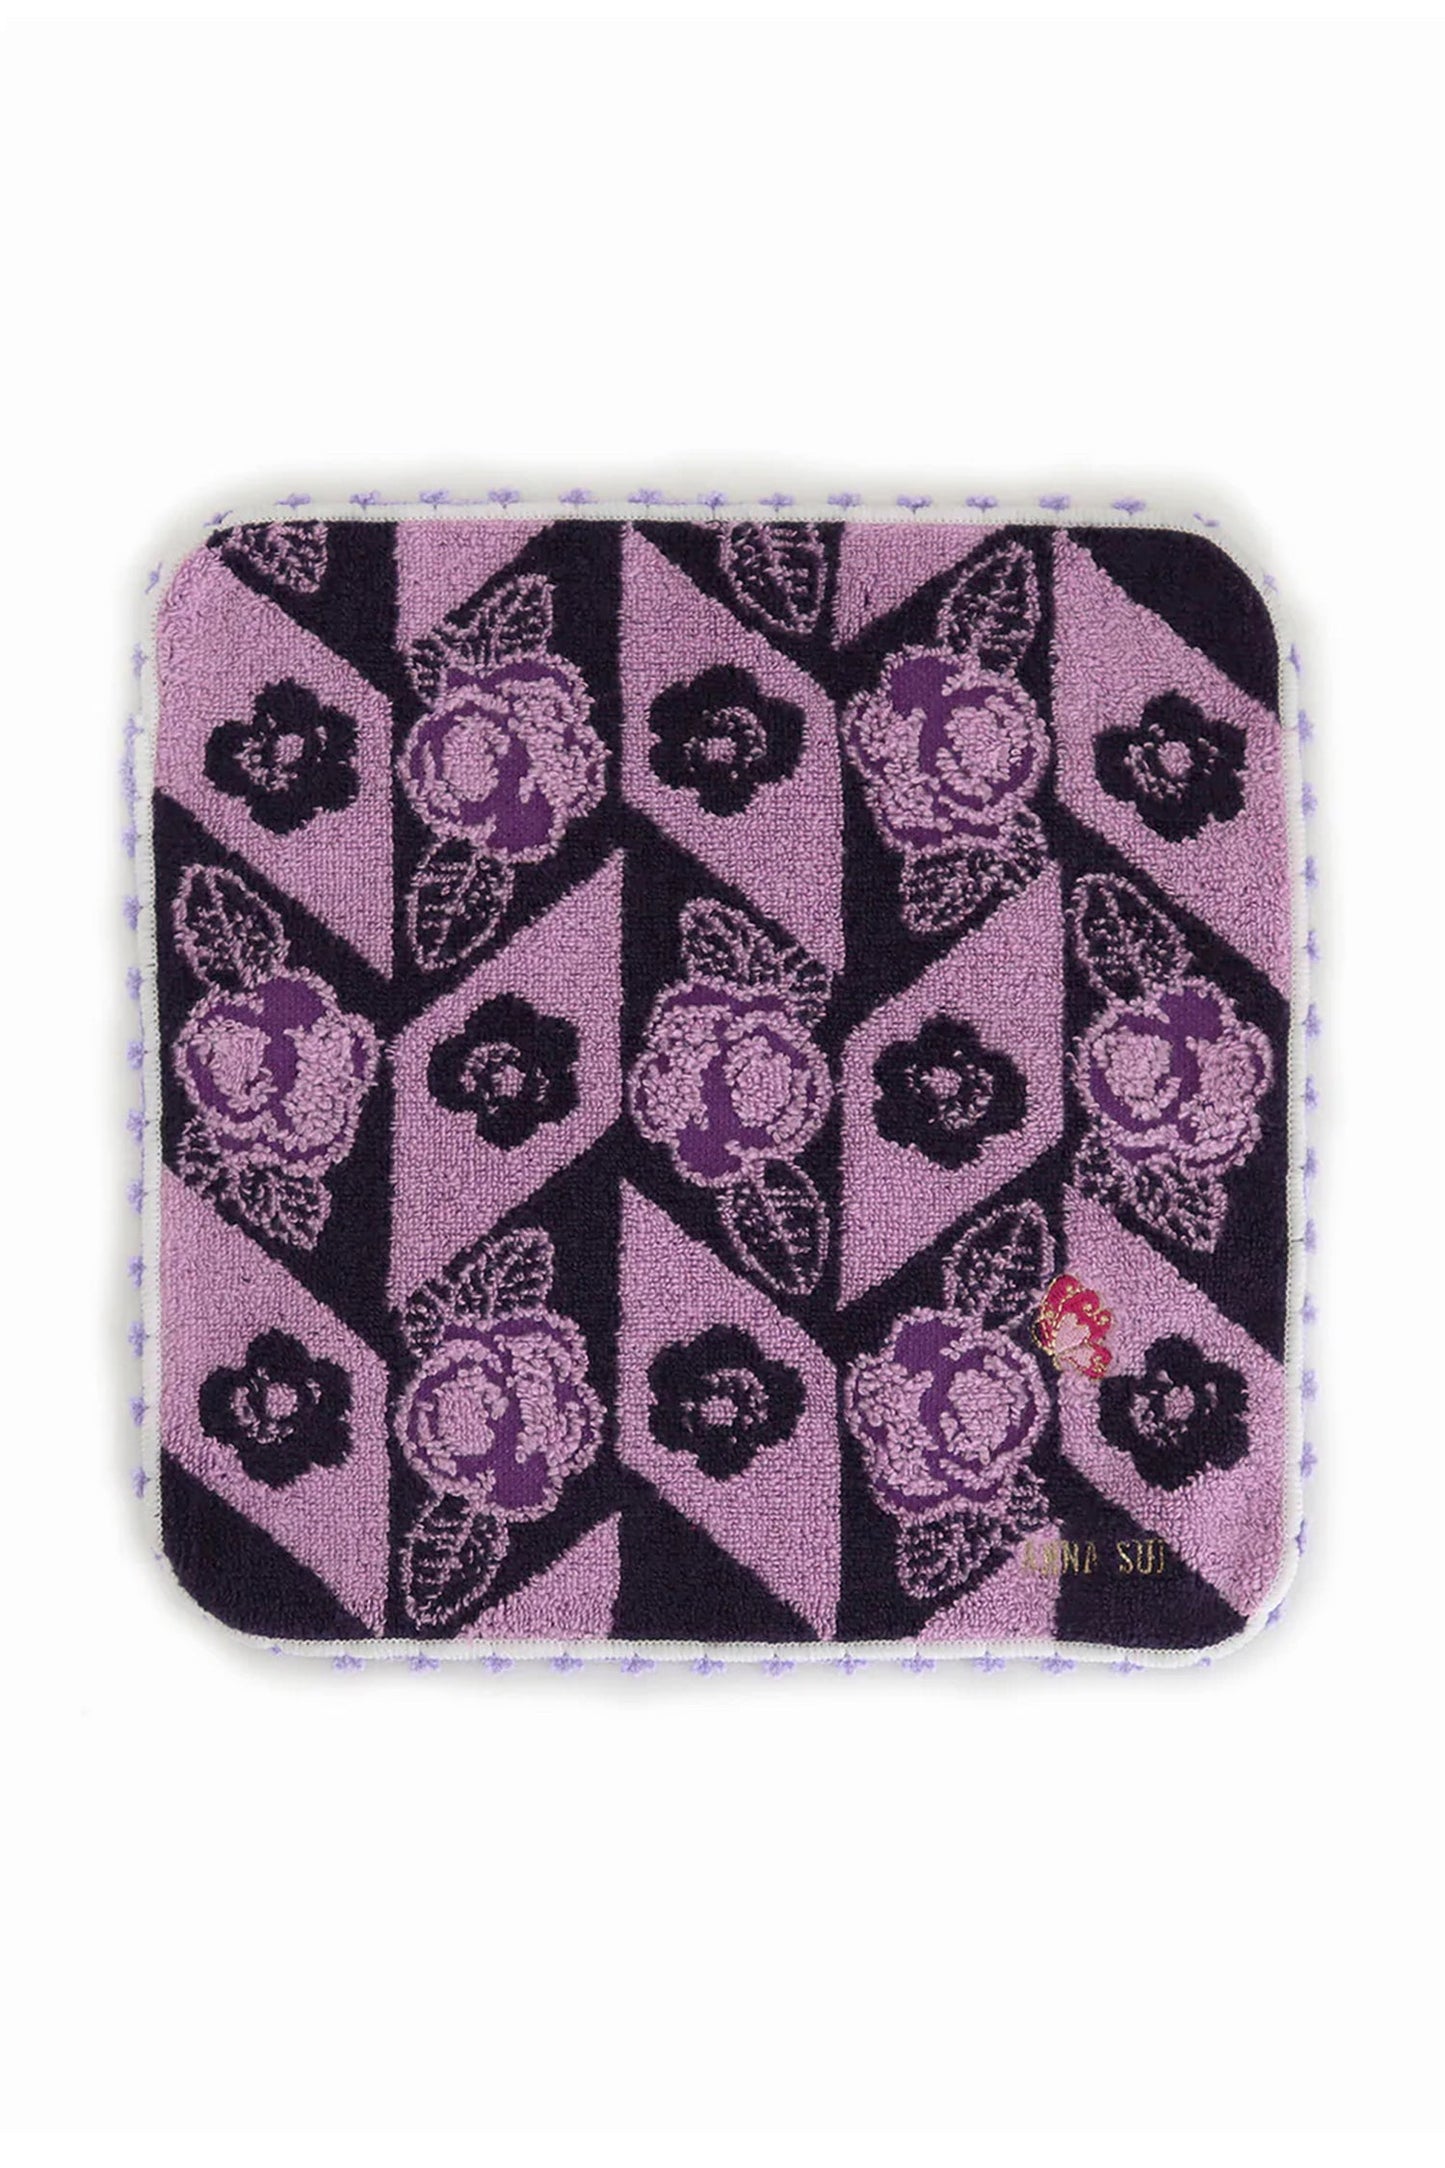 Washcloth, floral design, alternate purple/black, Anna Sui label on edge, an orange butterfly